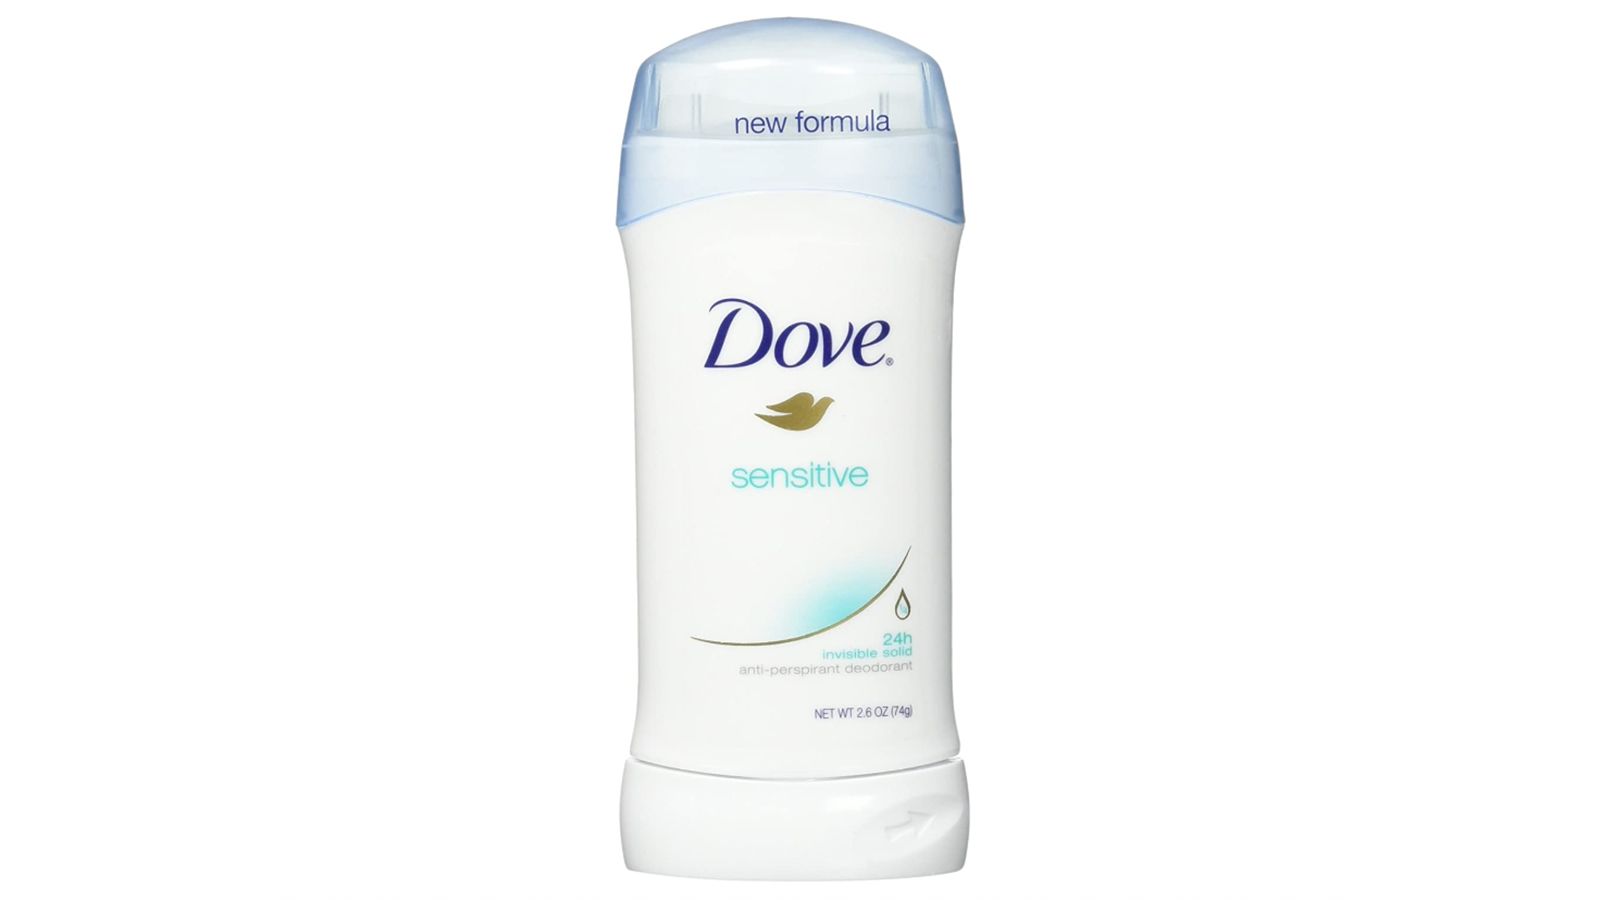 Soar hybrid forbruger 16 best deodorants of 2022 that smell great and last long | CNN Underscored